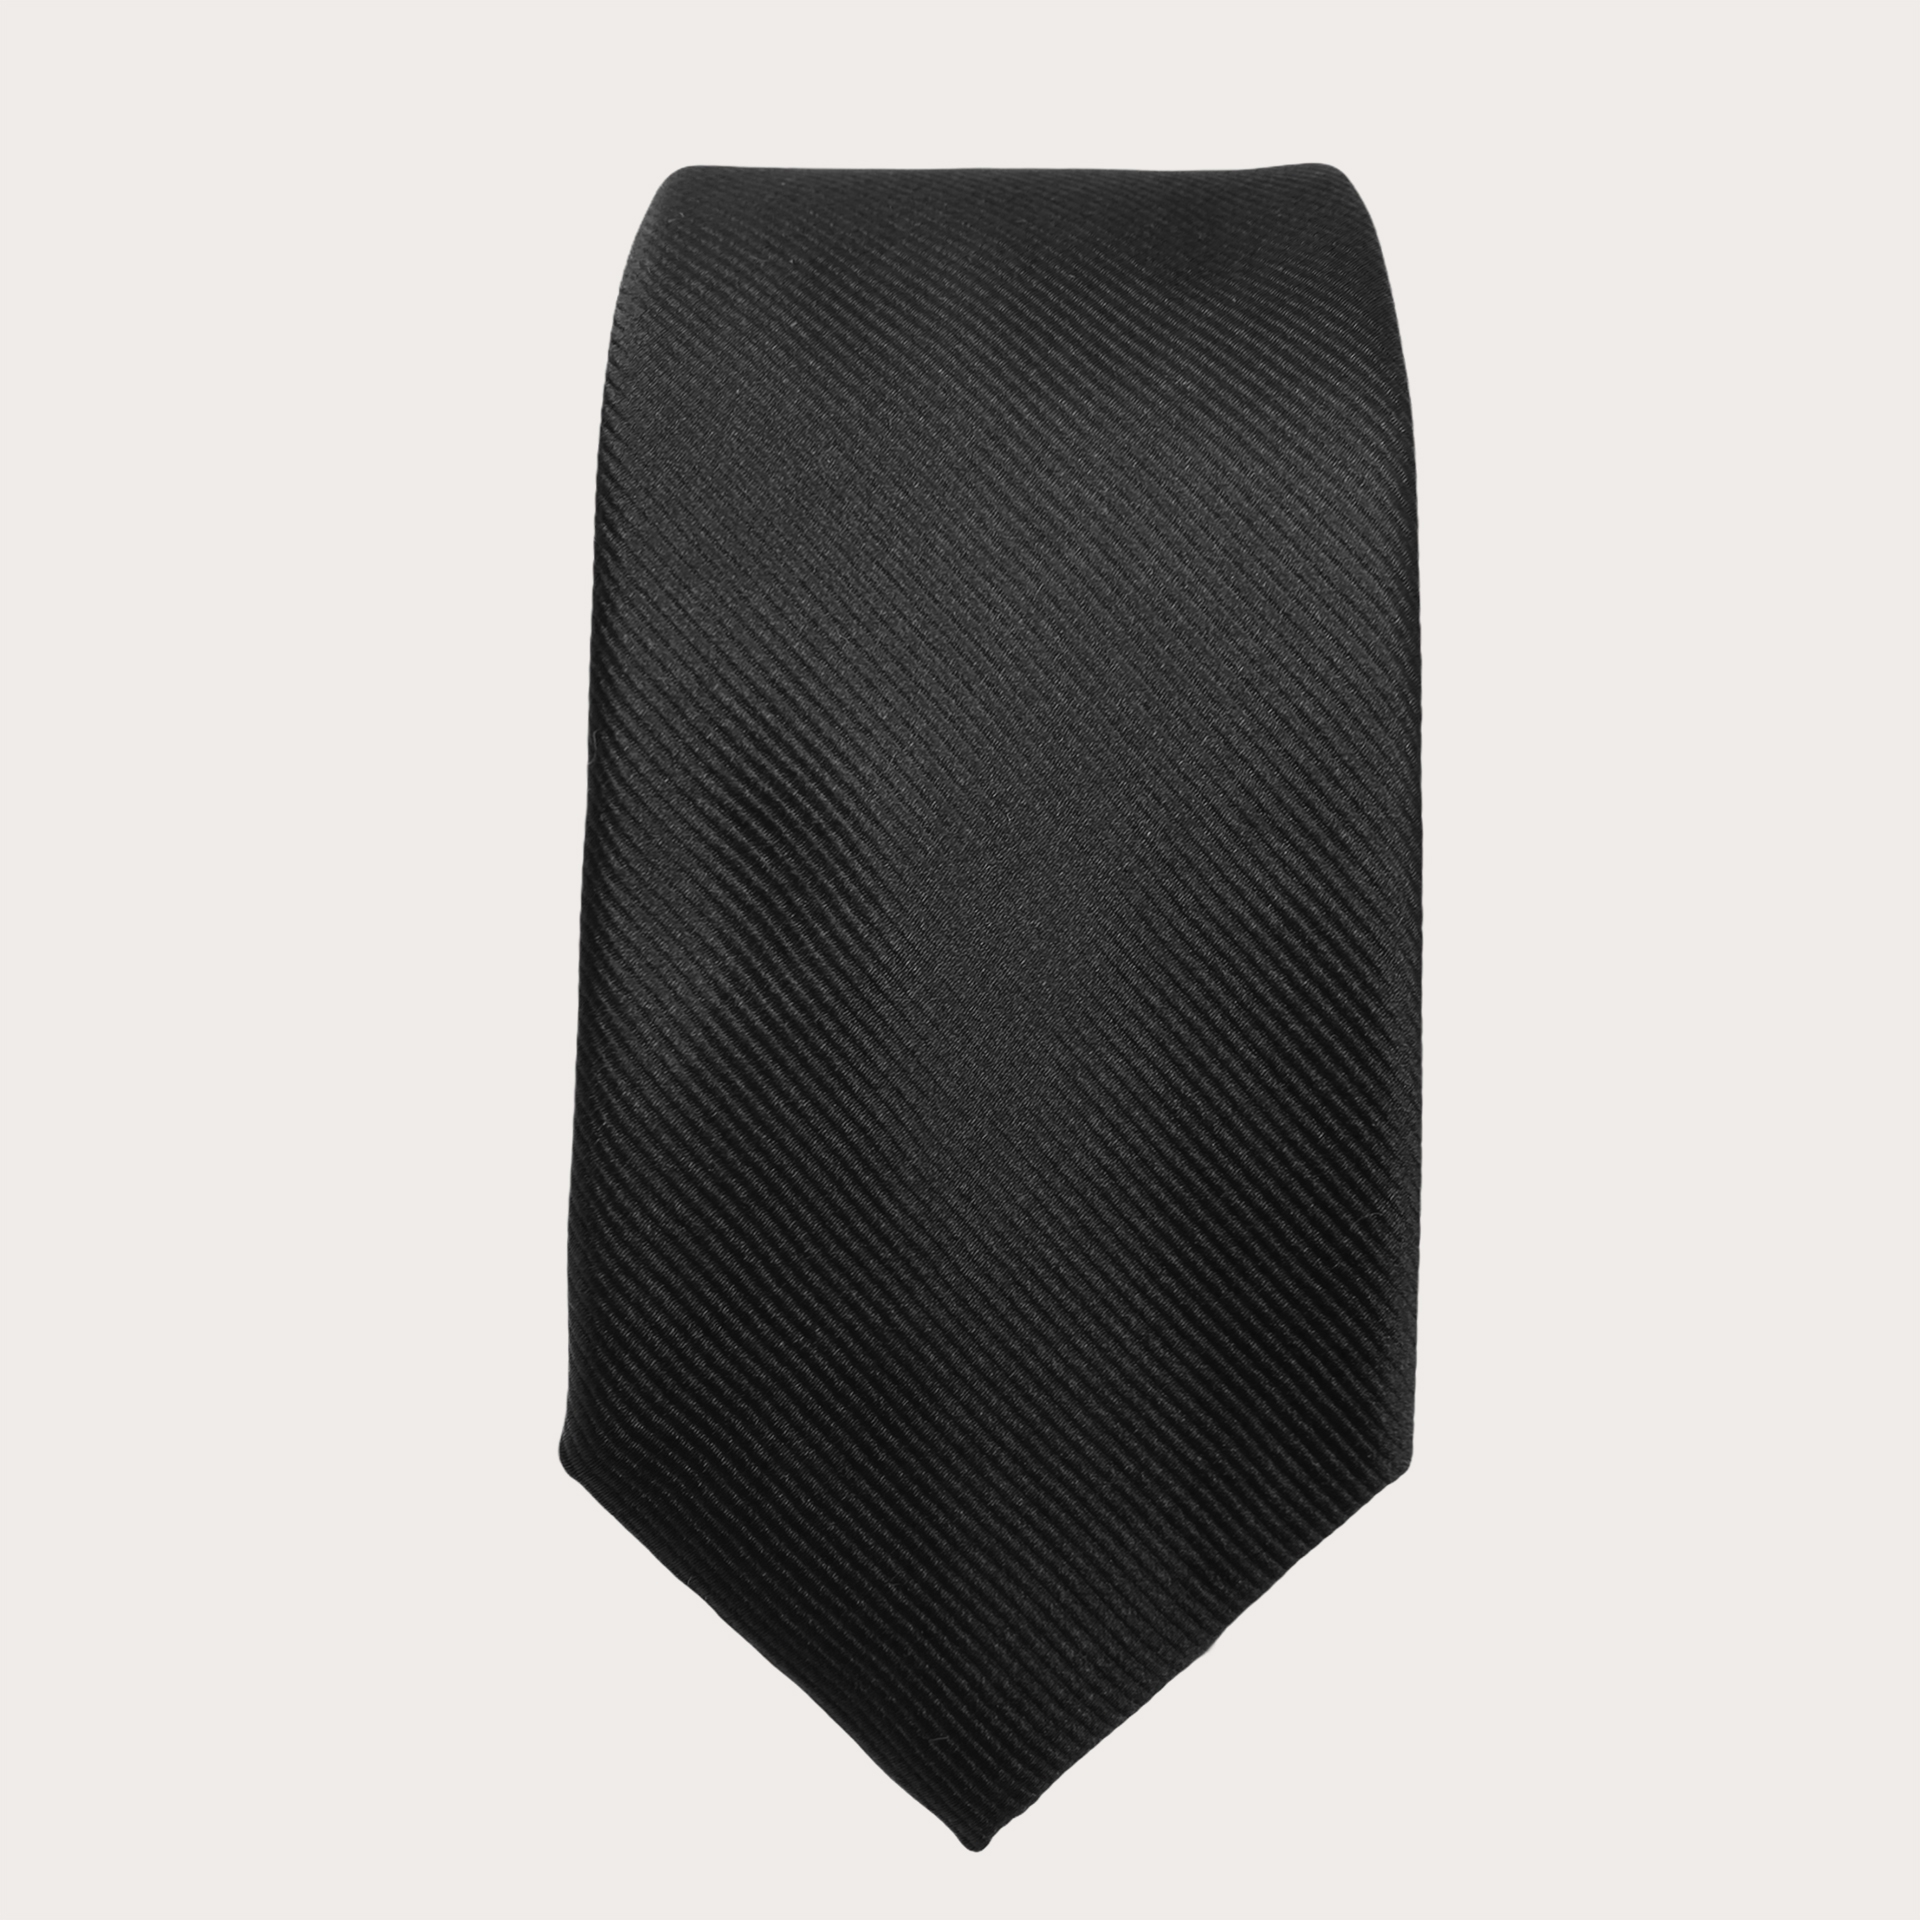 BRUCLE Cravatta classica in pura seta, nero